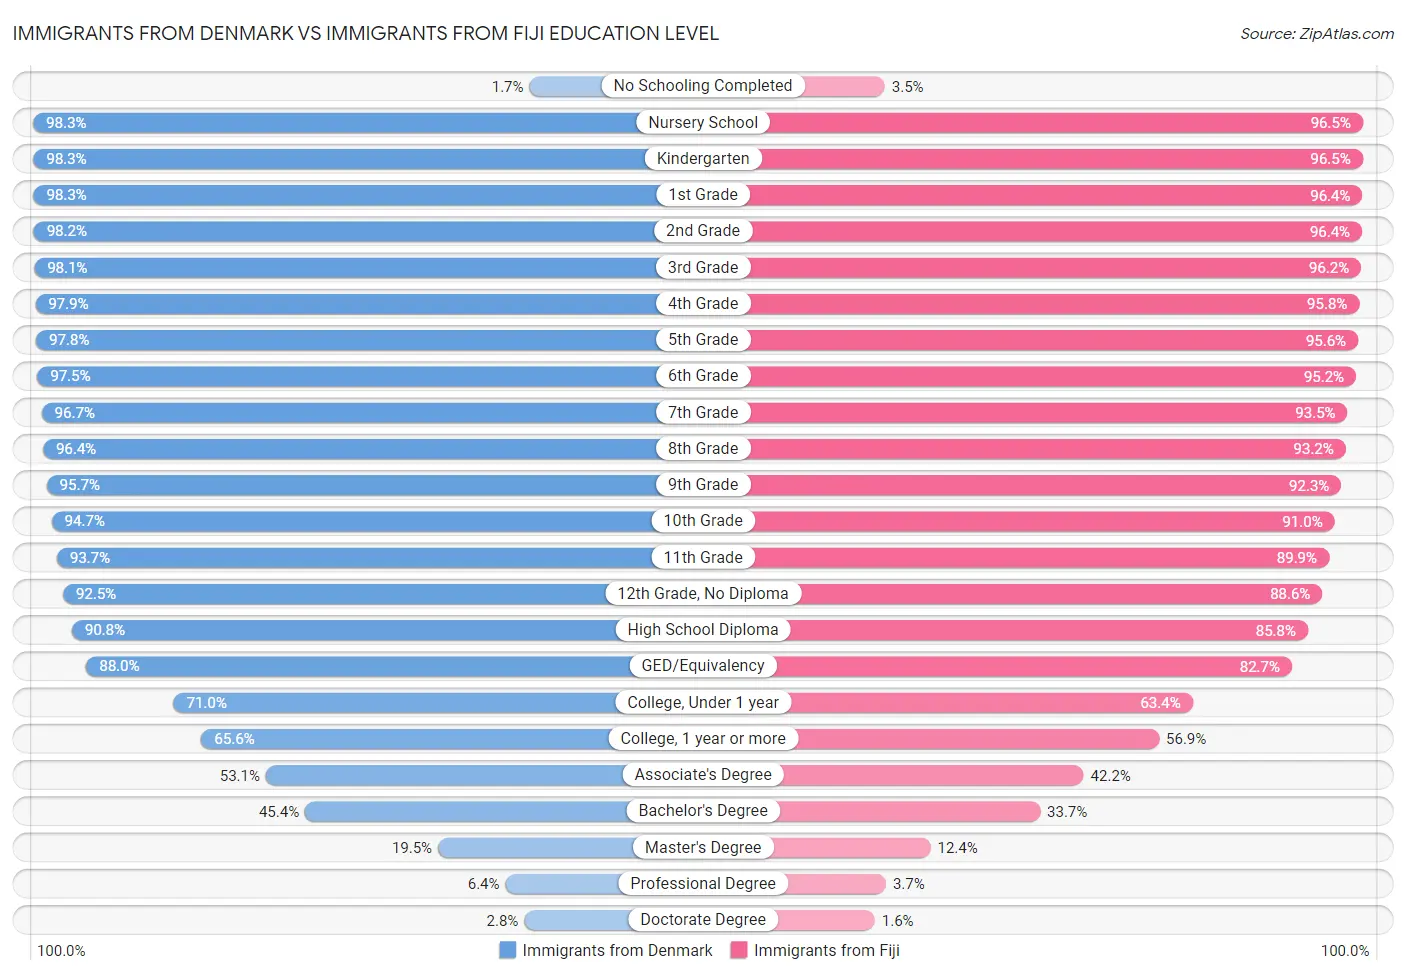 Immigrants from Denmark vs Immigrants from Fiji Education Level